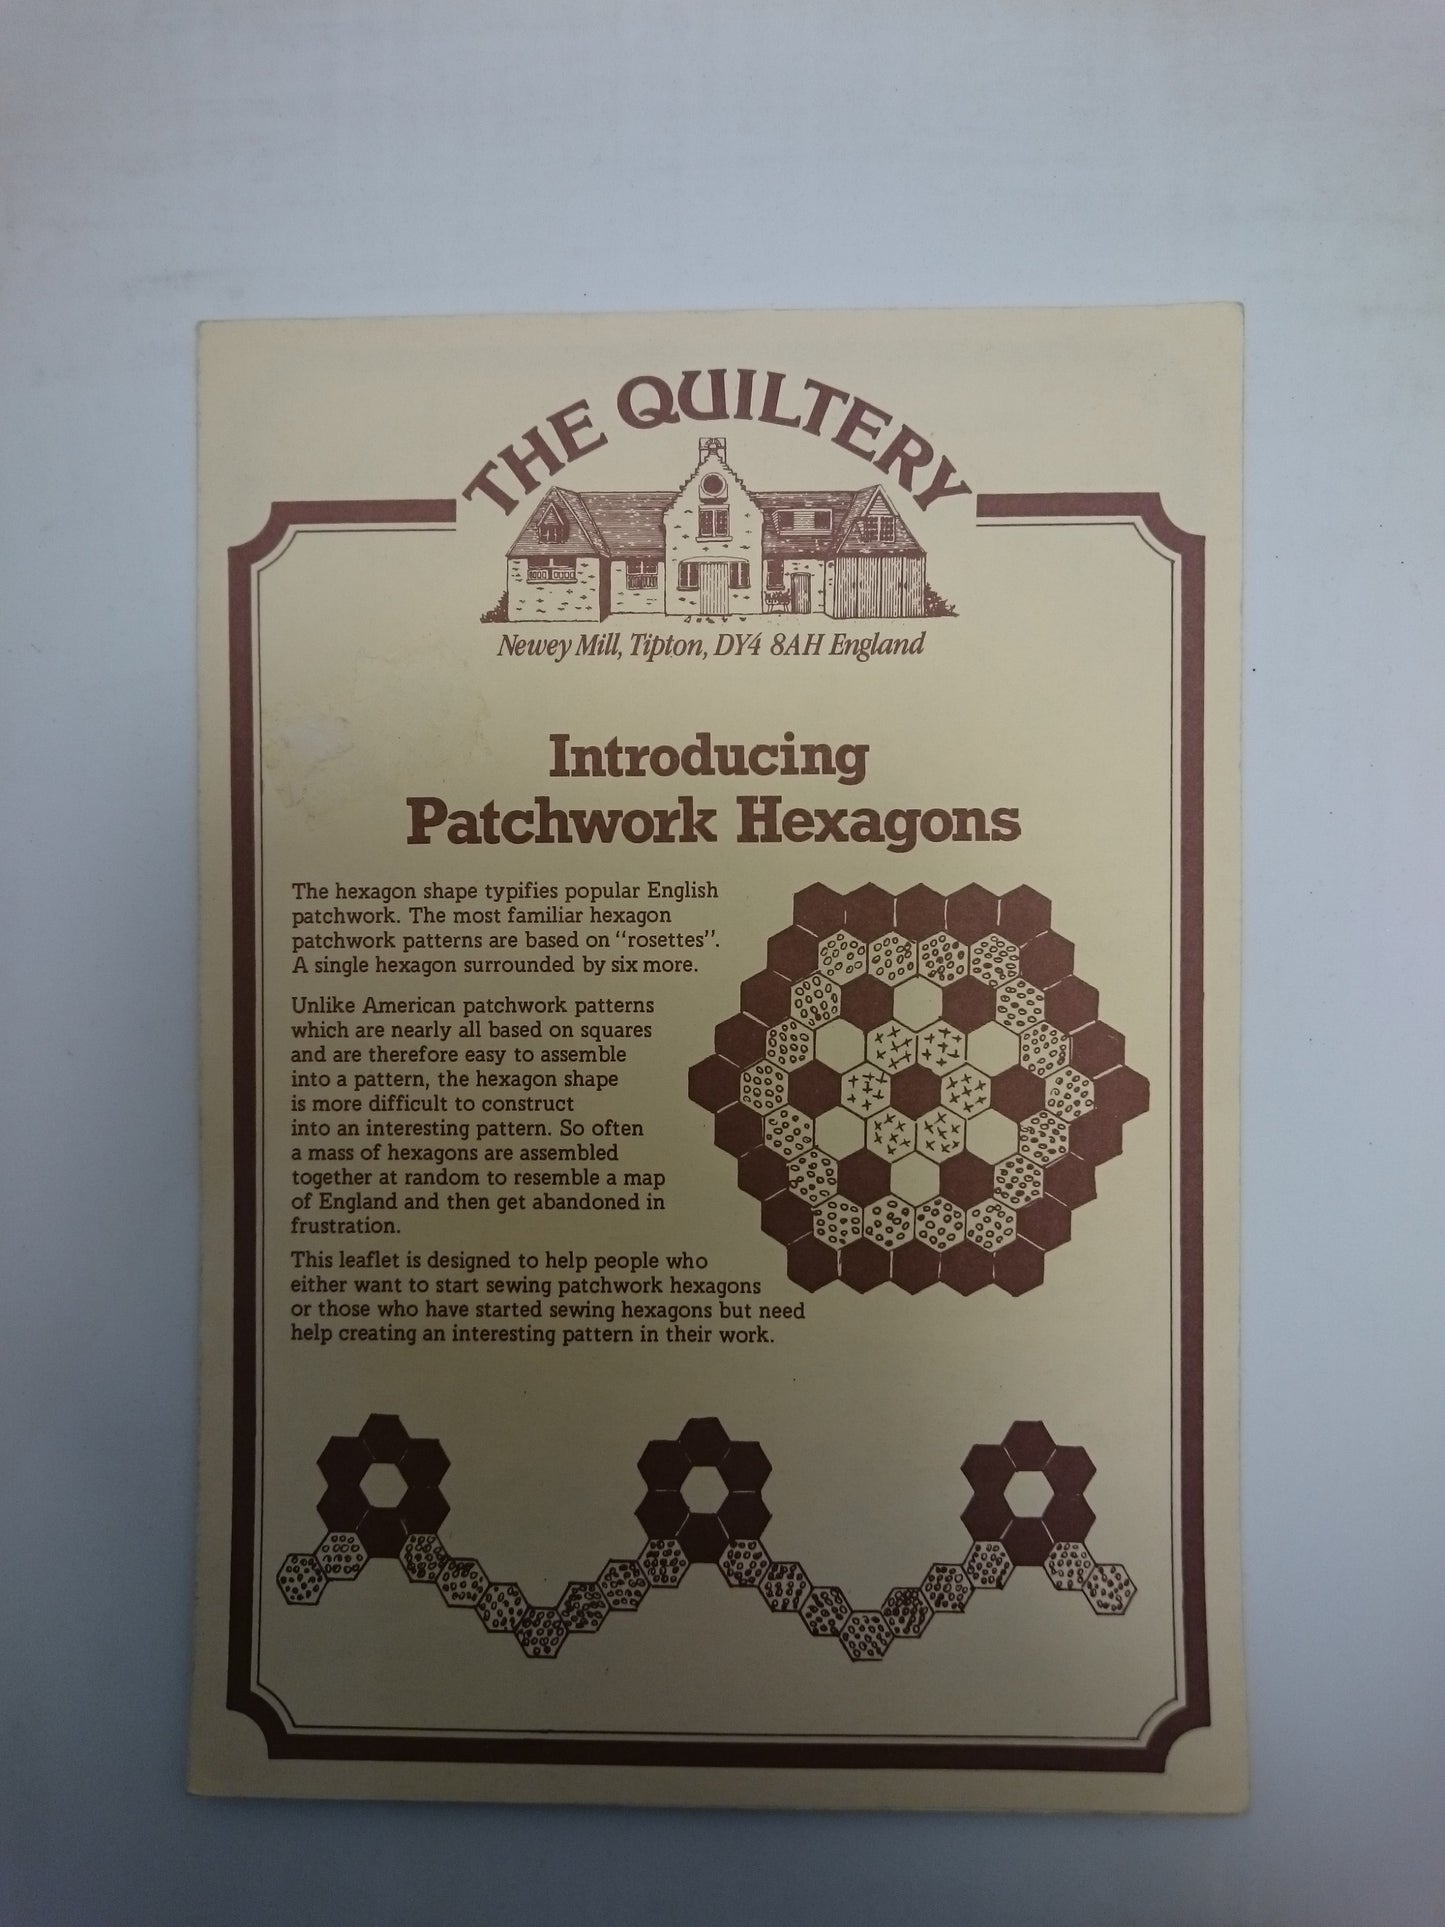 Introducing Patchwork Hexagons